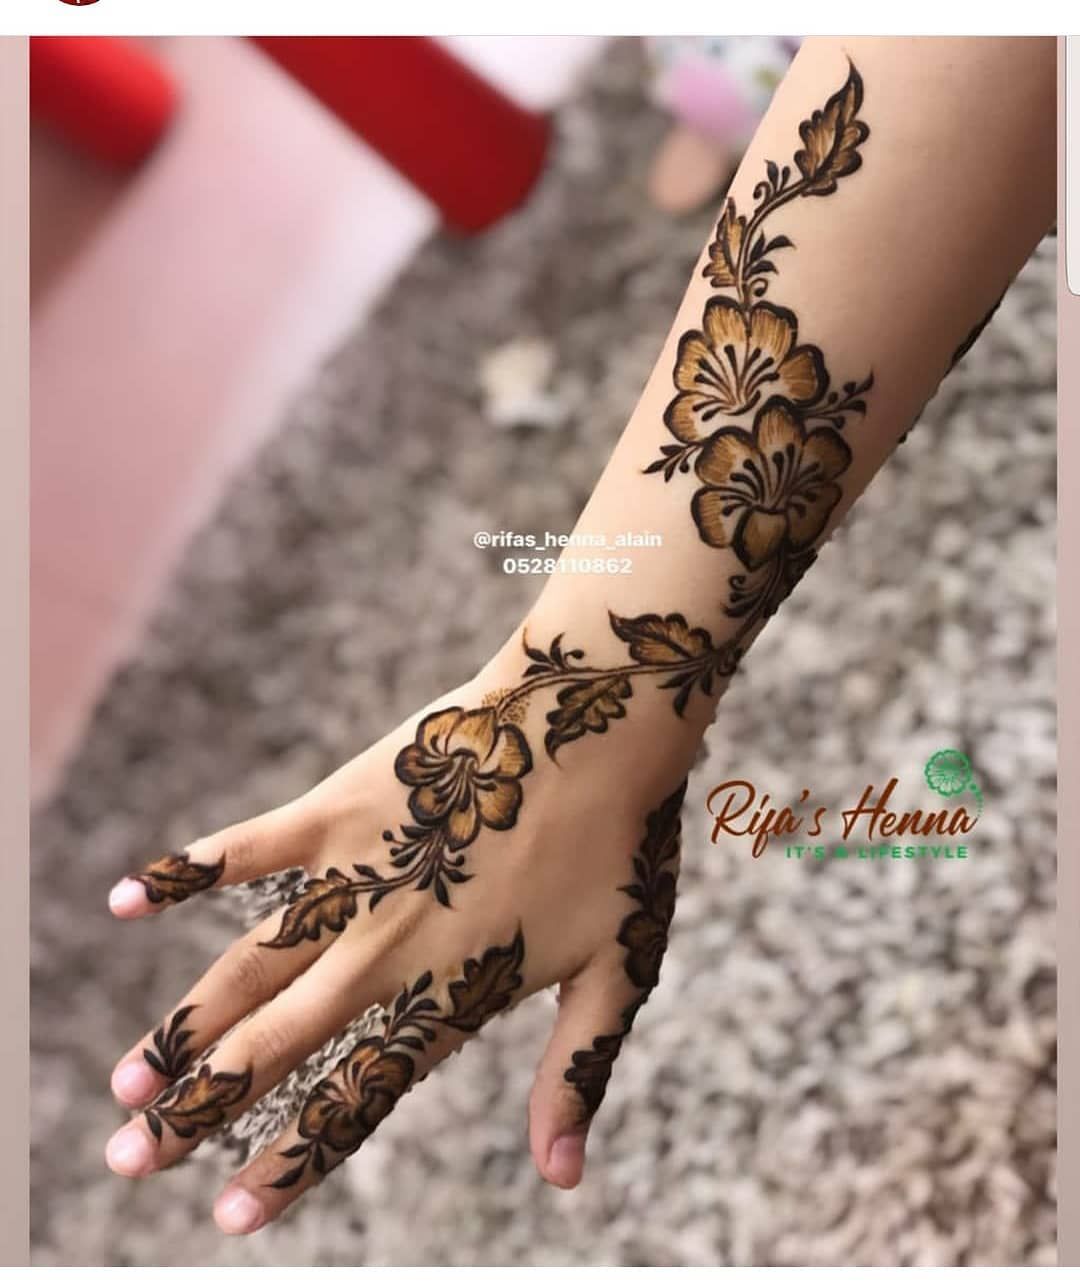 Shahina Creations on Instagram: “@rifas_henna_alain #Mehndilovers #mehndilovers #mayashenna #hennaartist #henna #hennaart #mehndi #mehndiart #hennalovers #mehndioutfits…”